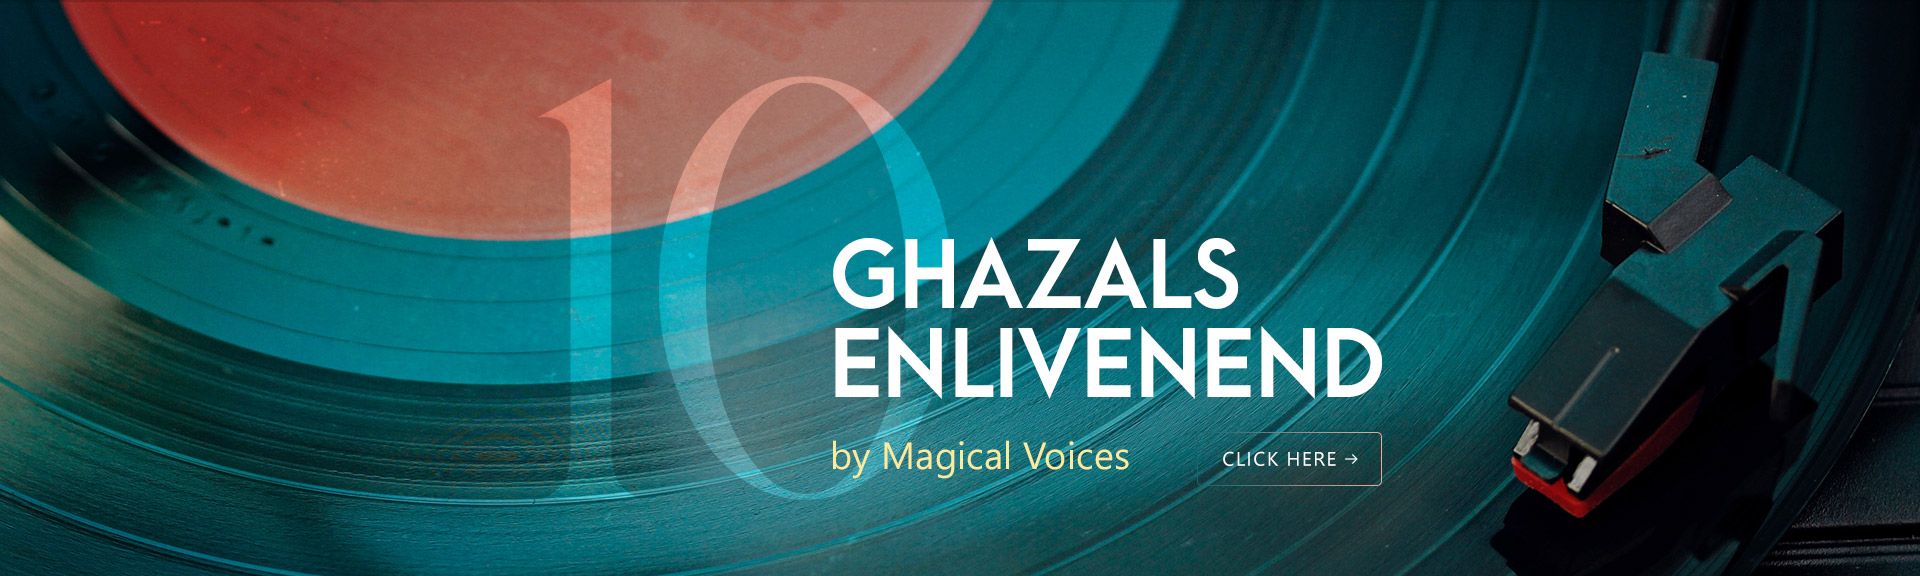 Urdu Poets - 10 ghazals